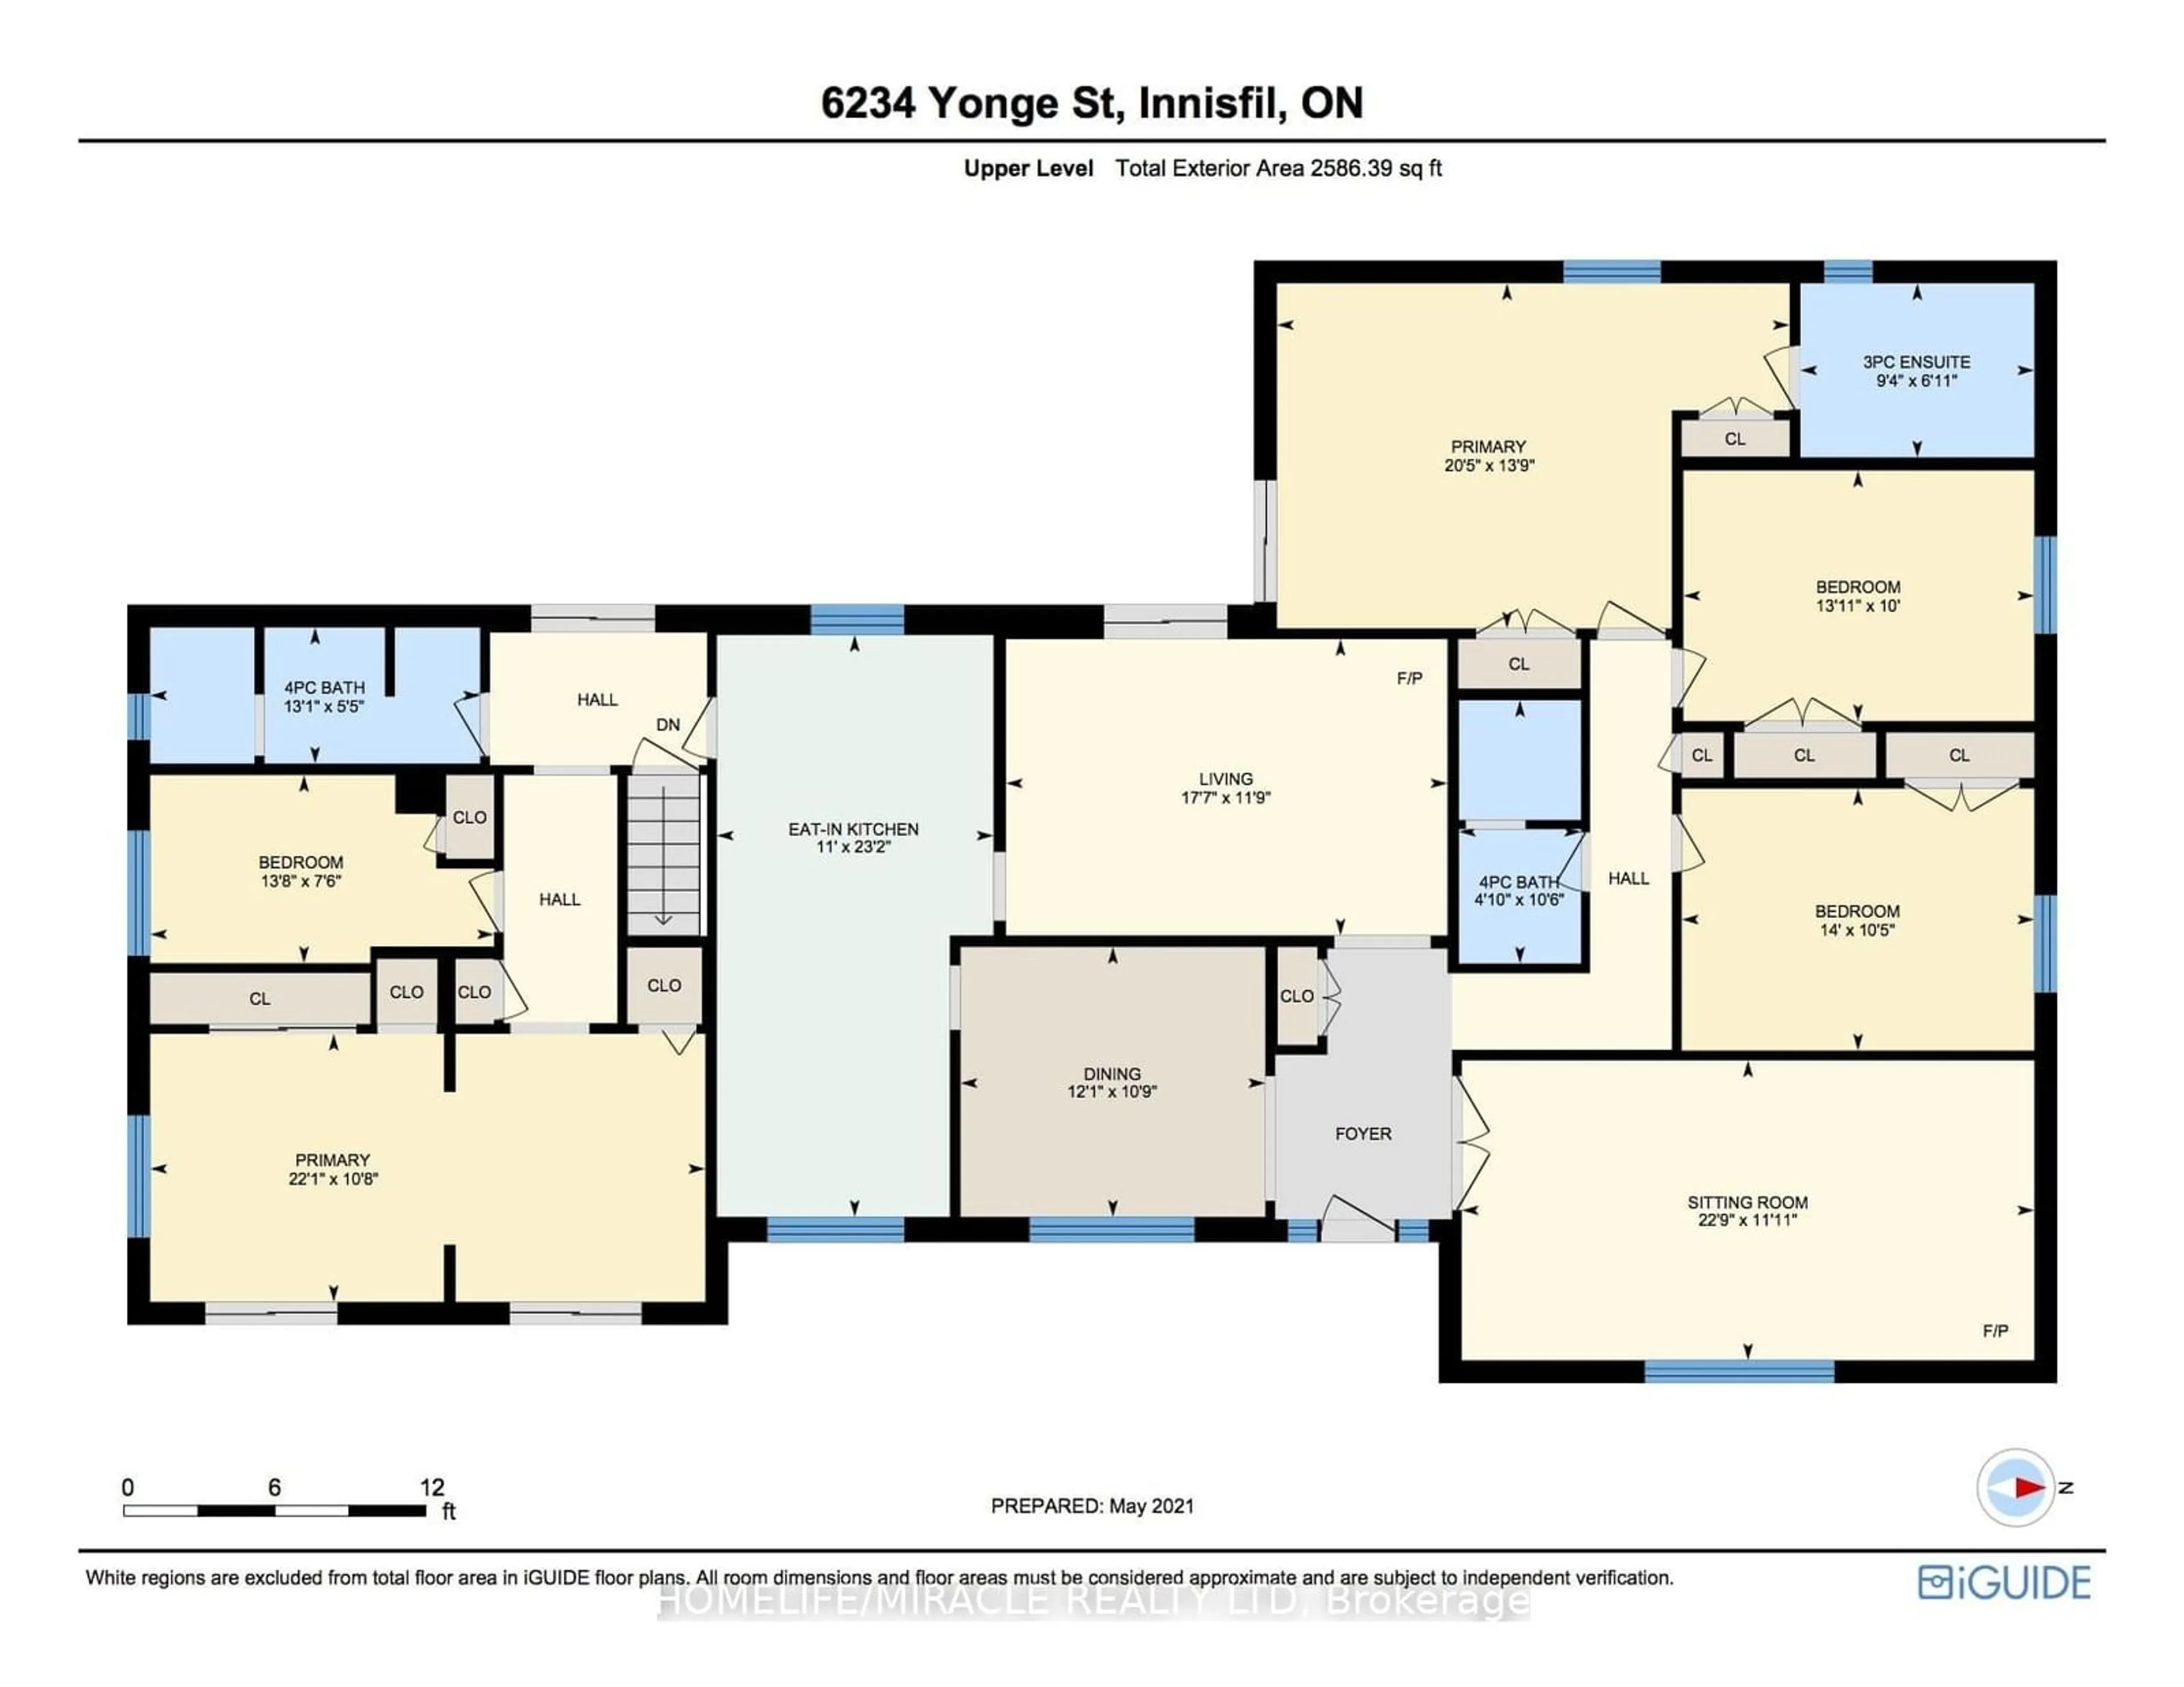 Floor plan for 6234 Yonge St, Innisfil Ontario L0L 1K0